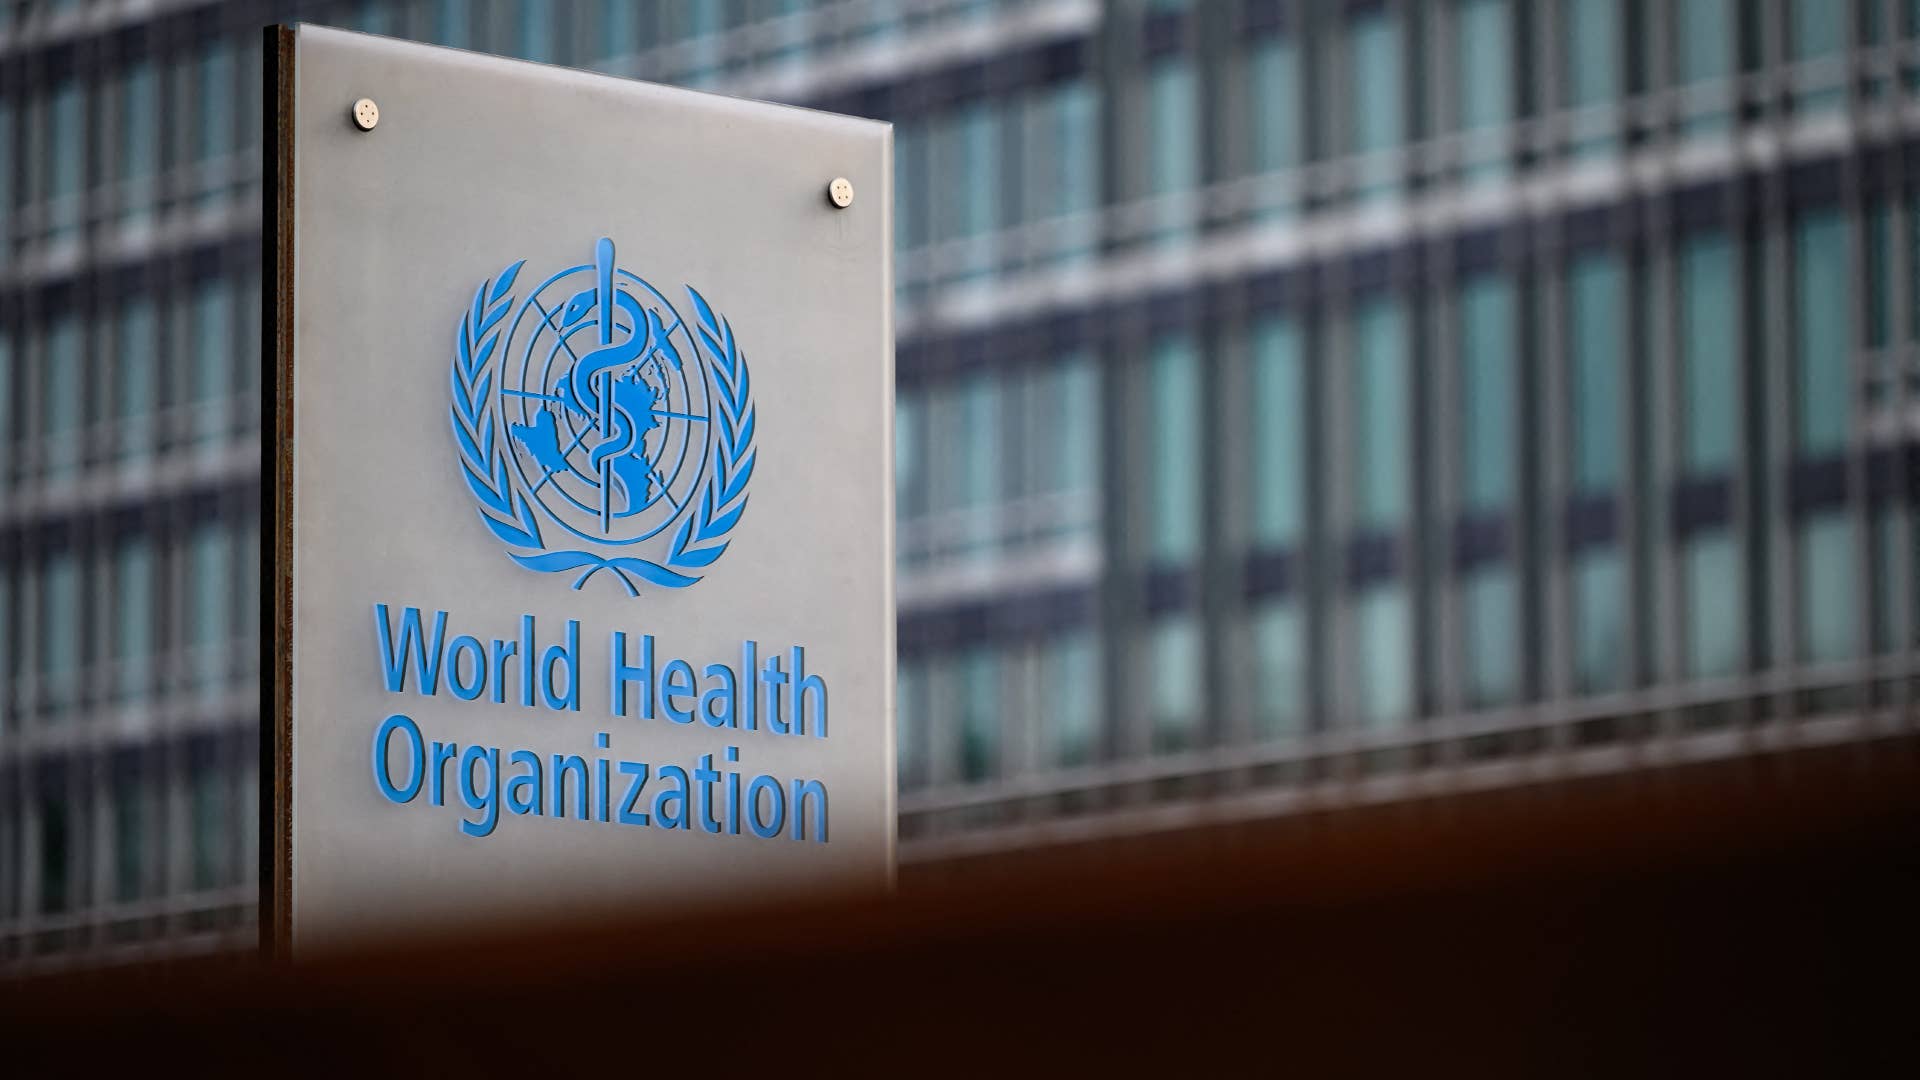 The World Health Organization logo is shown